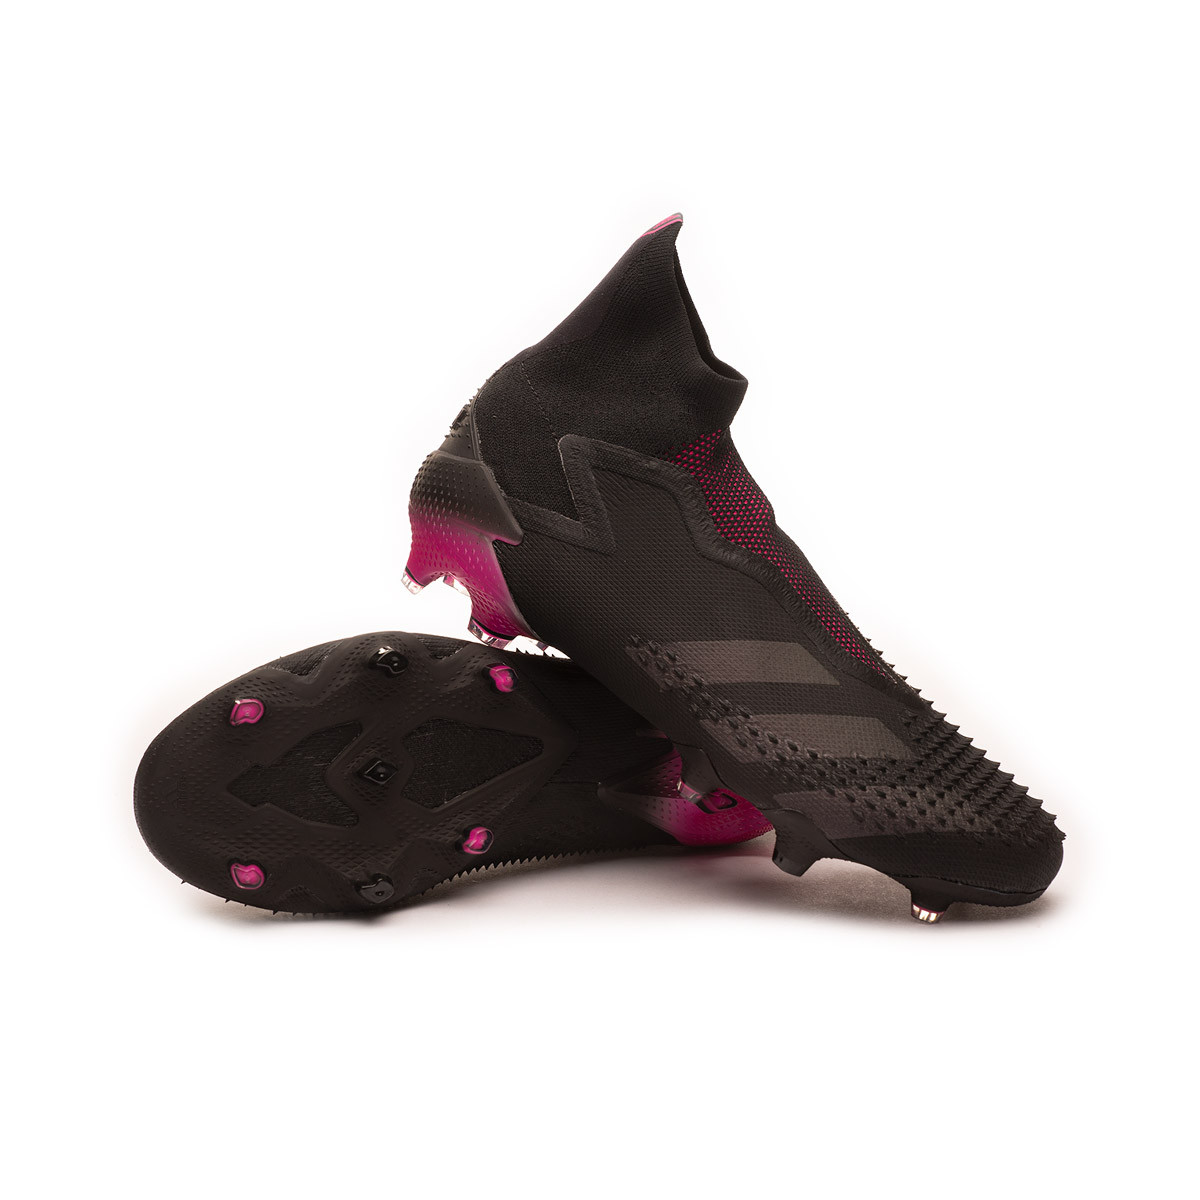 adidas predator mutator black and pink